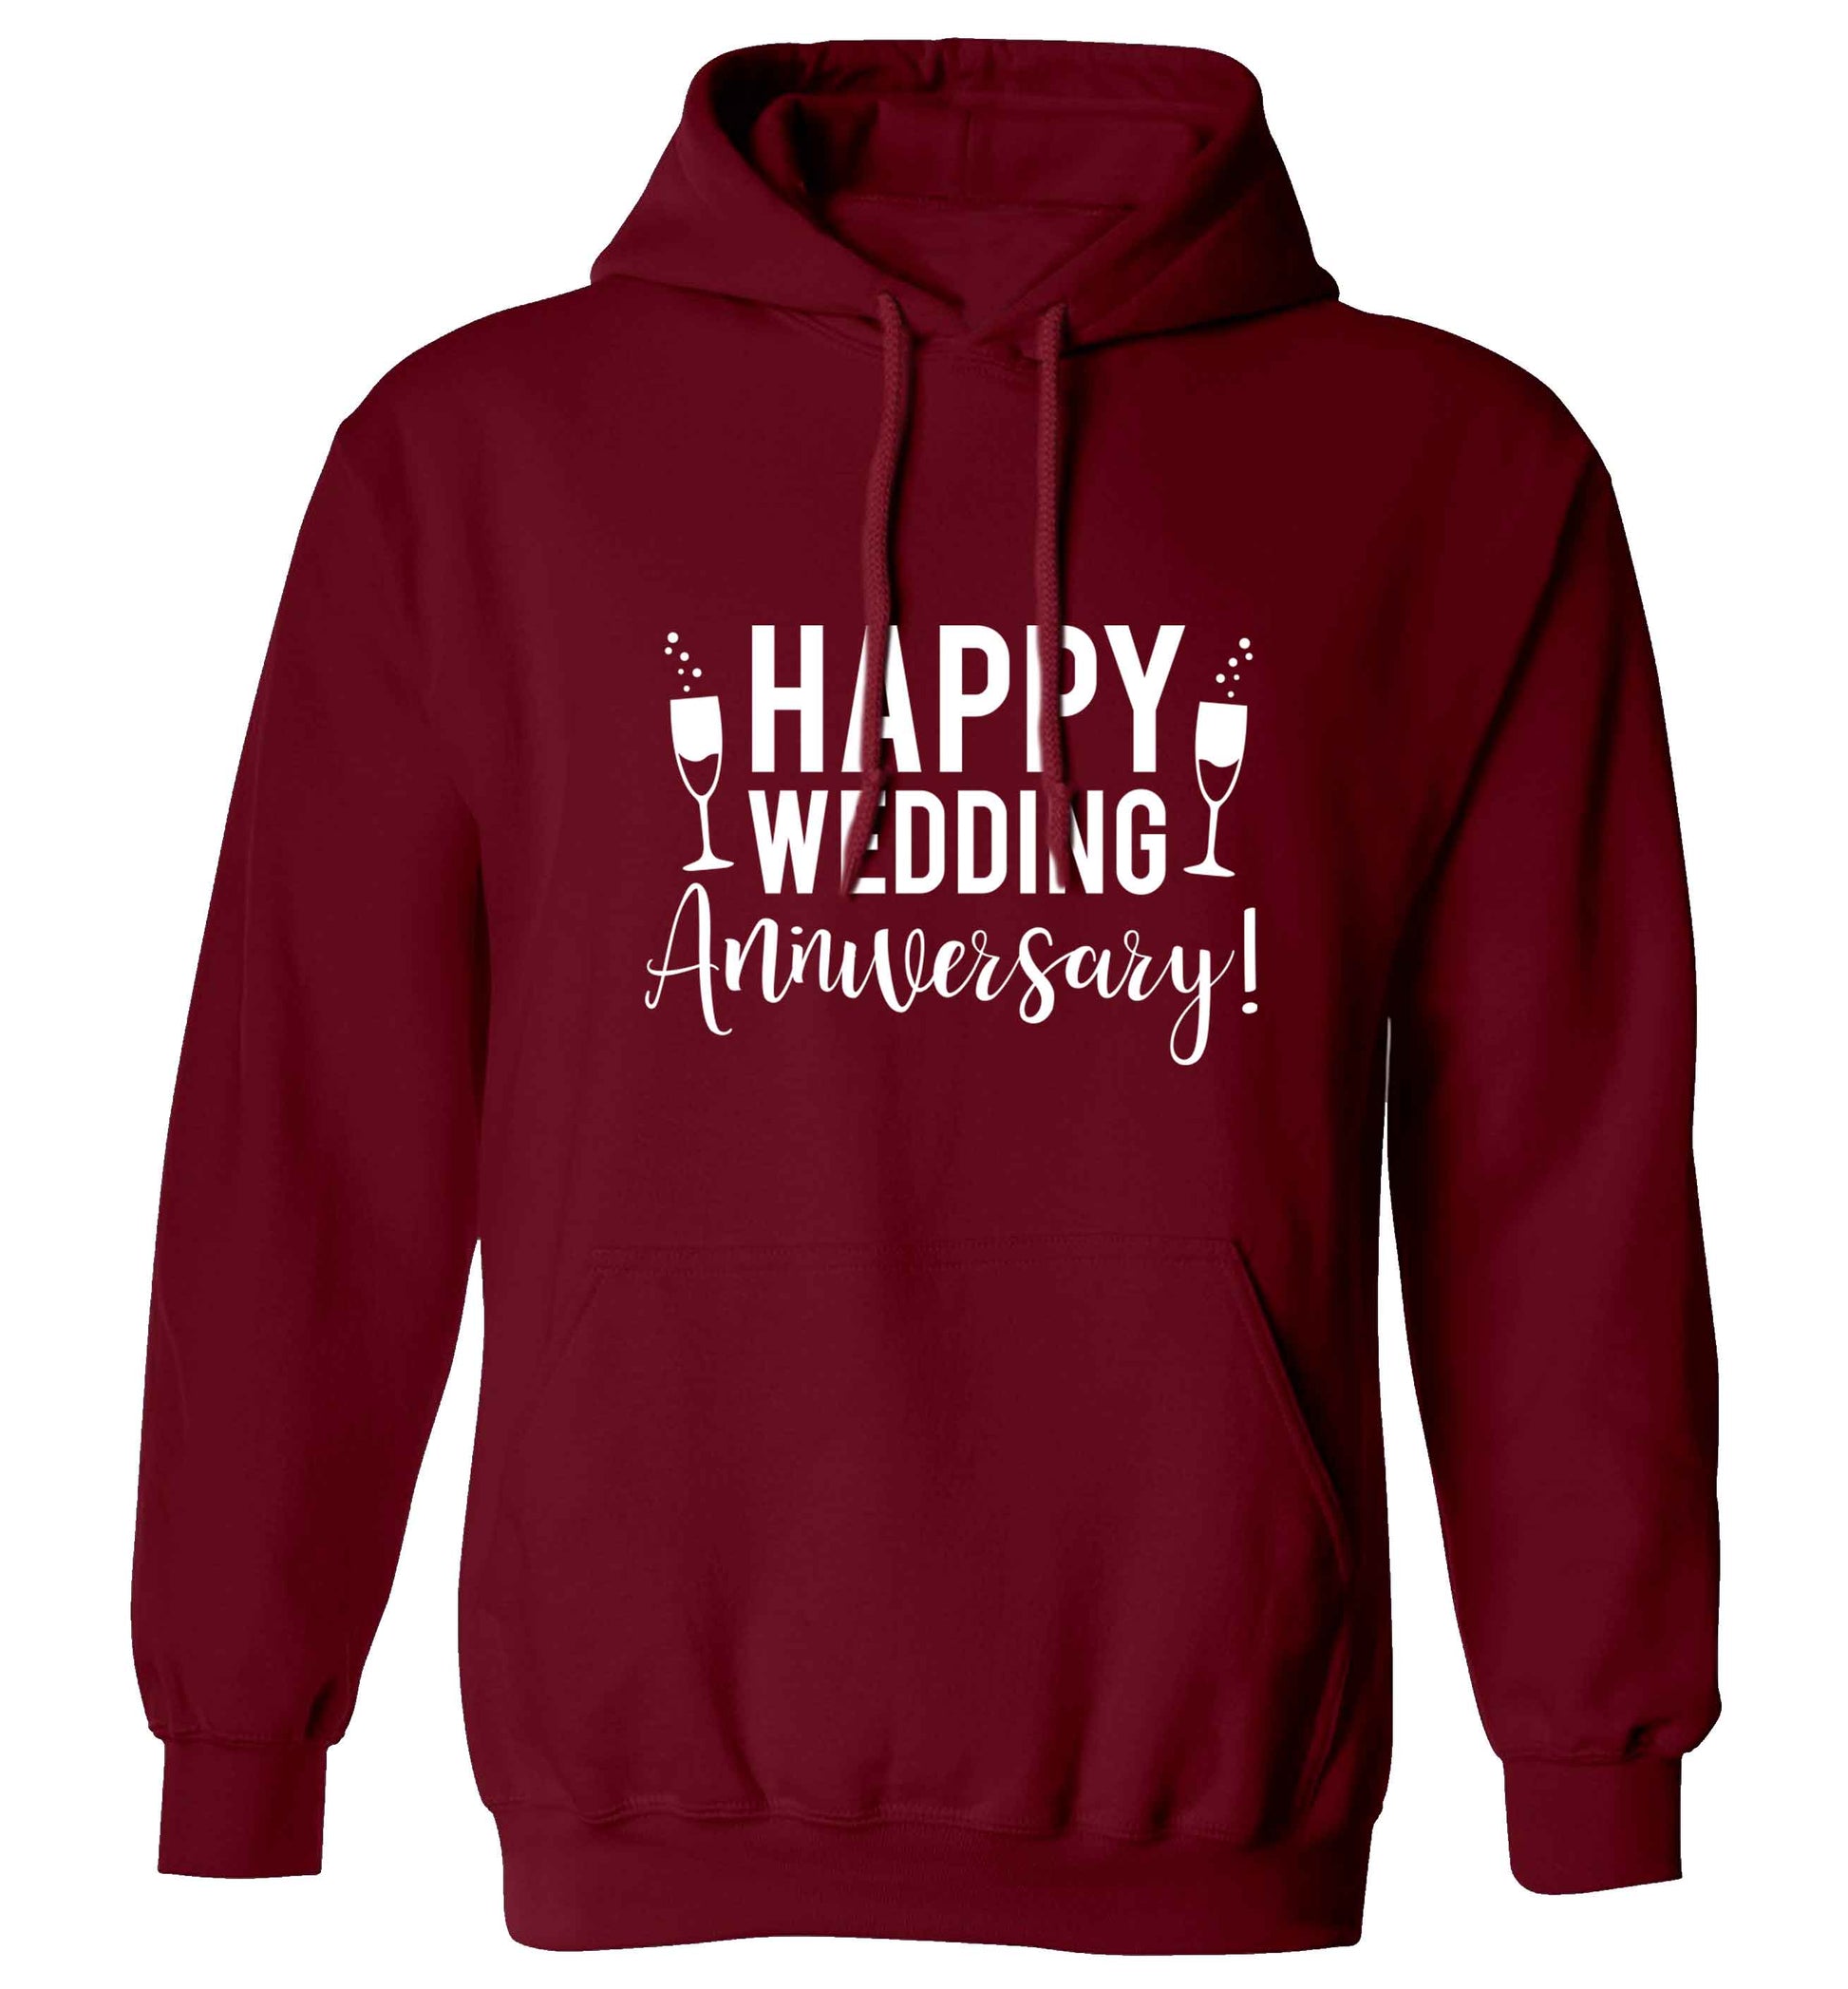 Happy wedding anniversary! adults unisex maroon hoodie 2XL